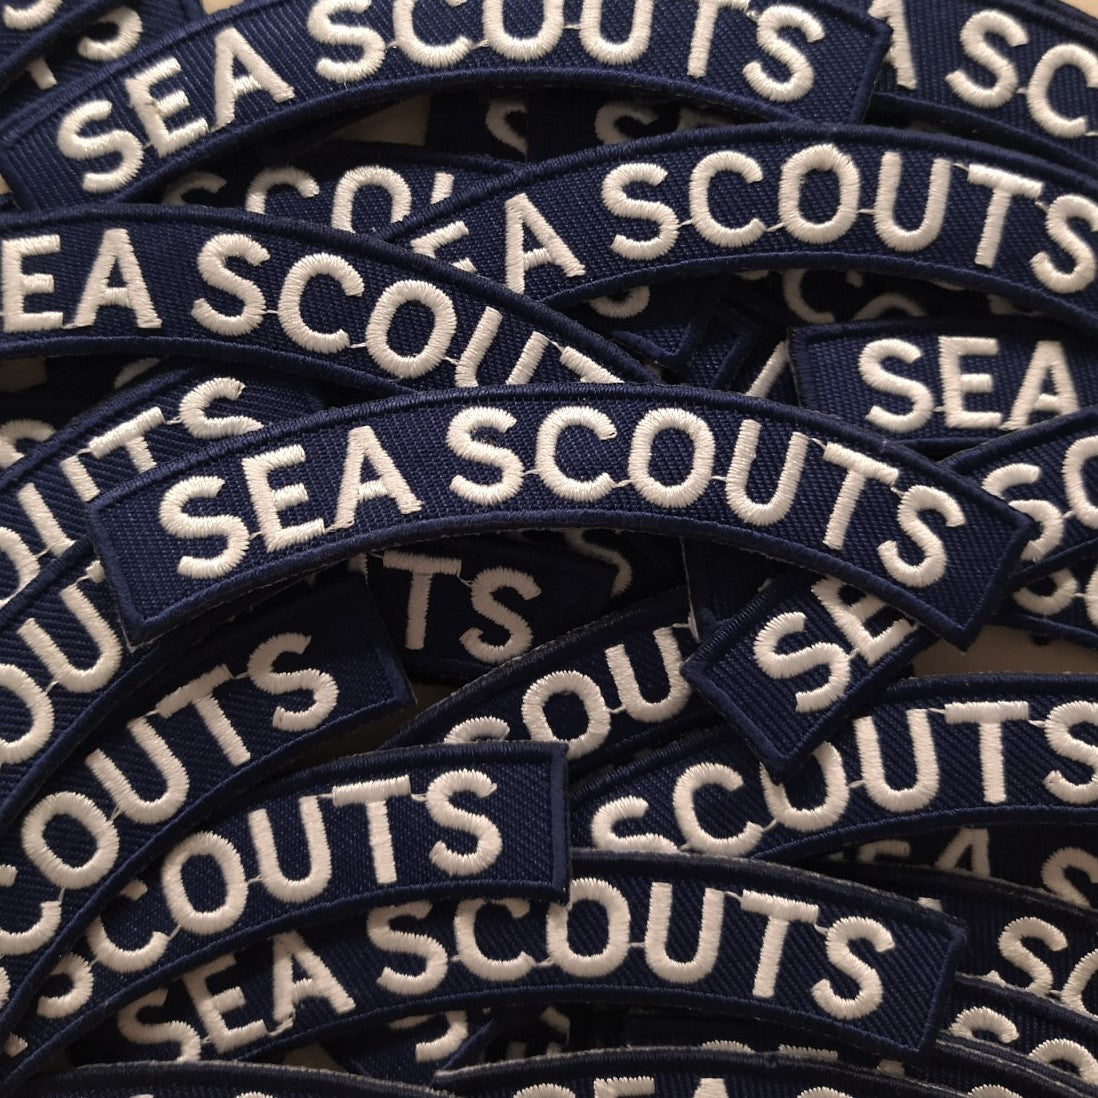 Seascouts badge boog